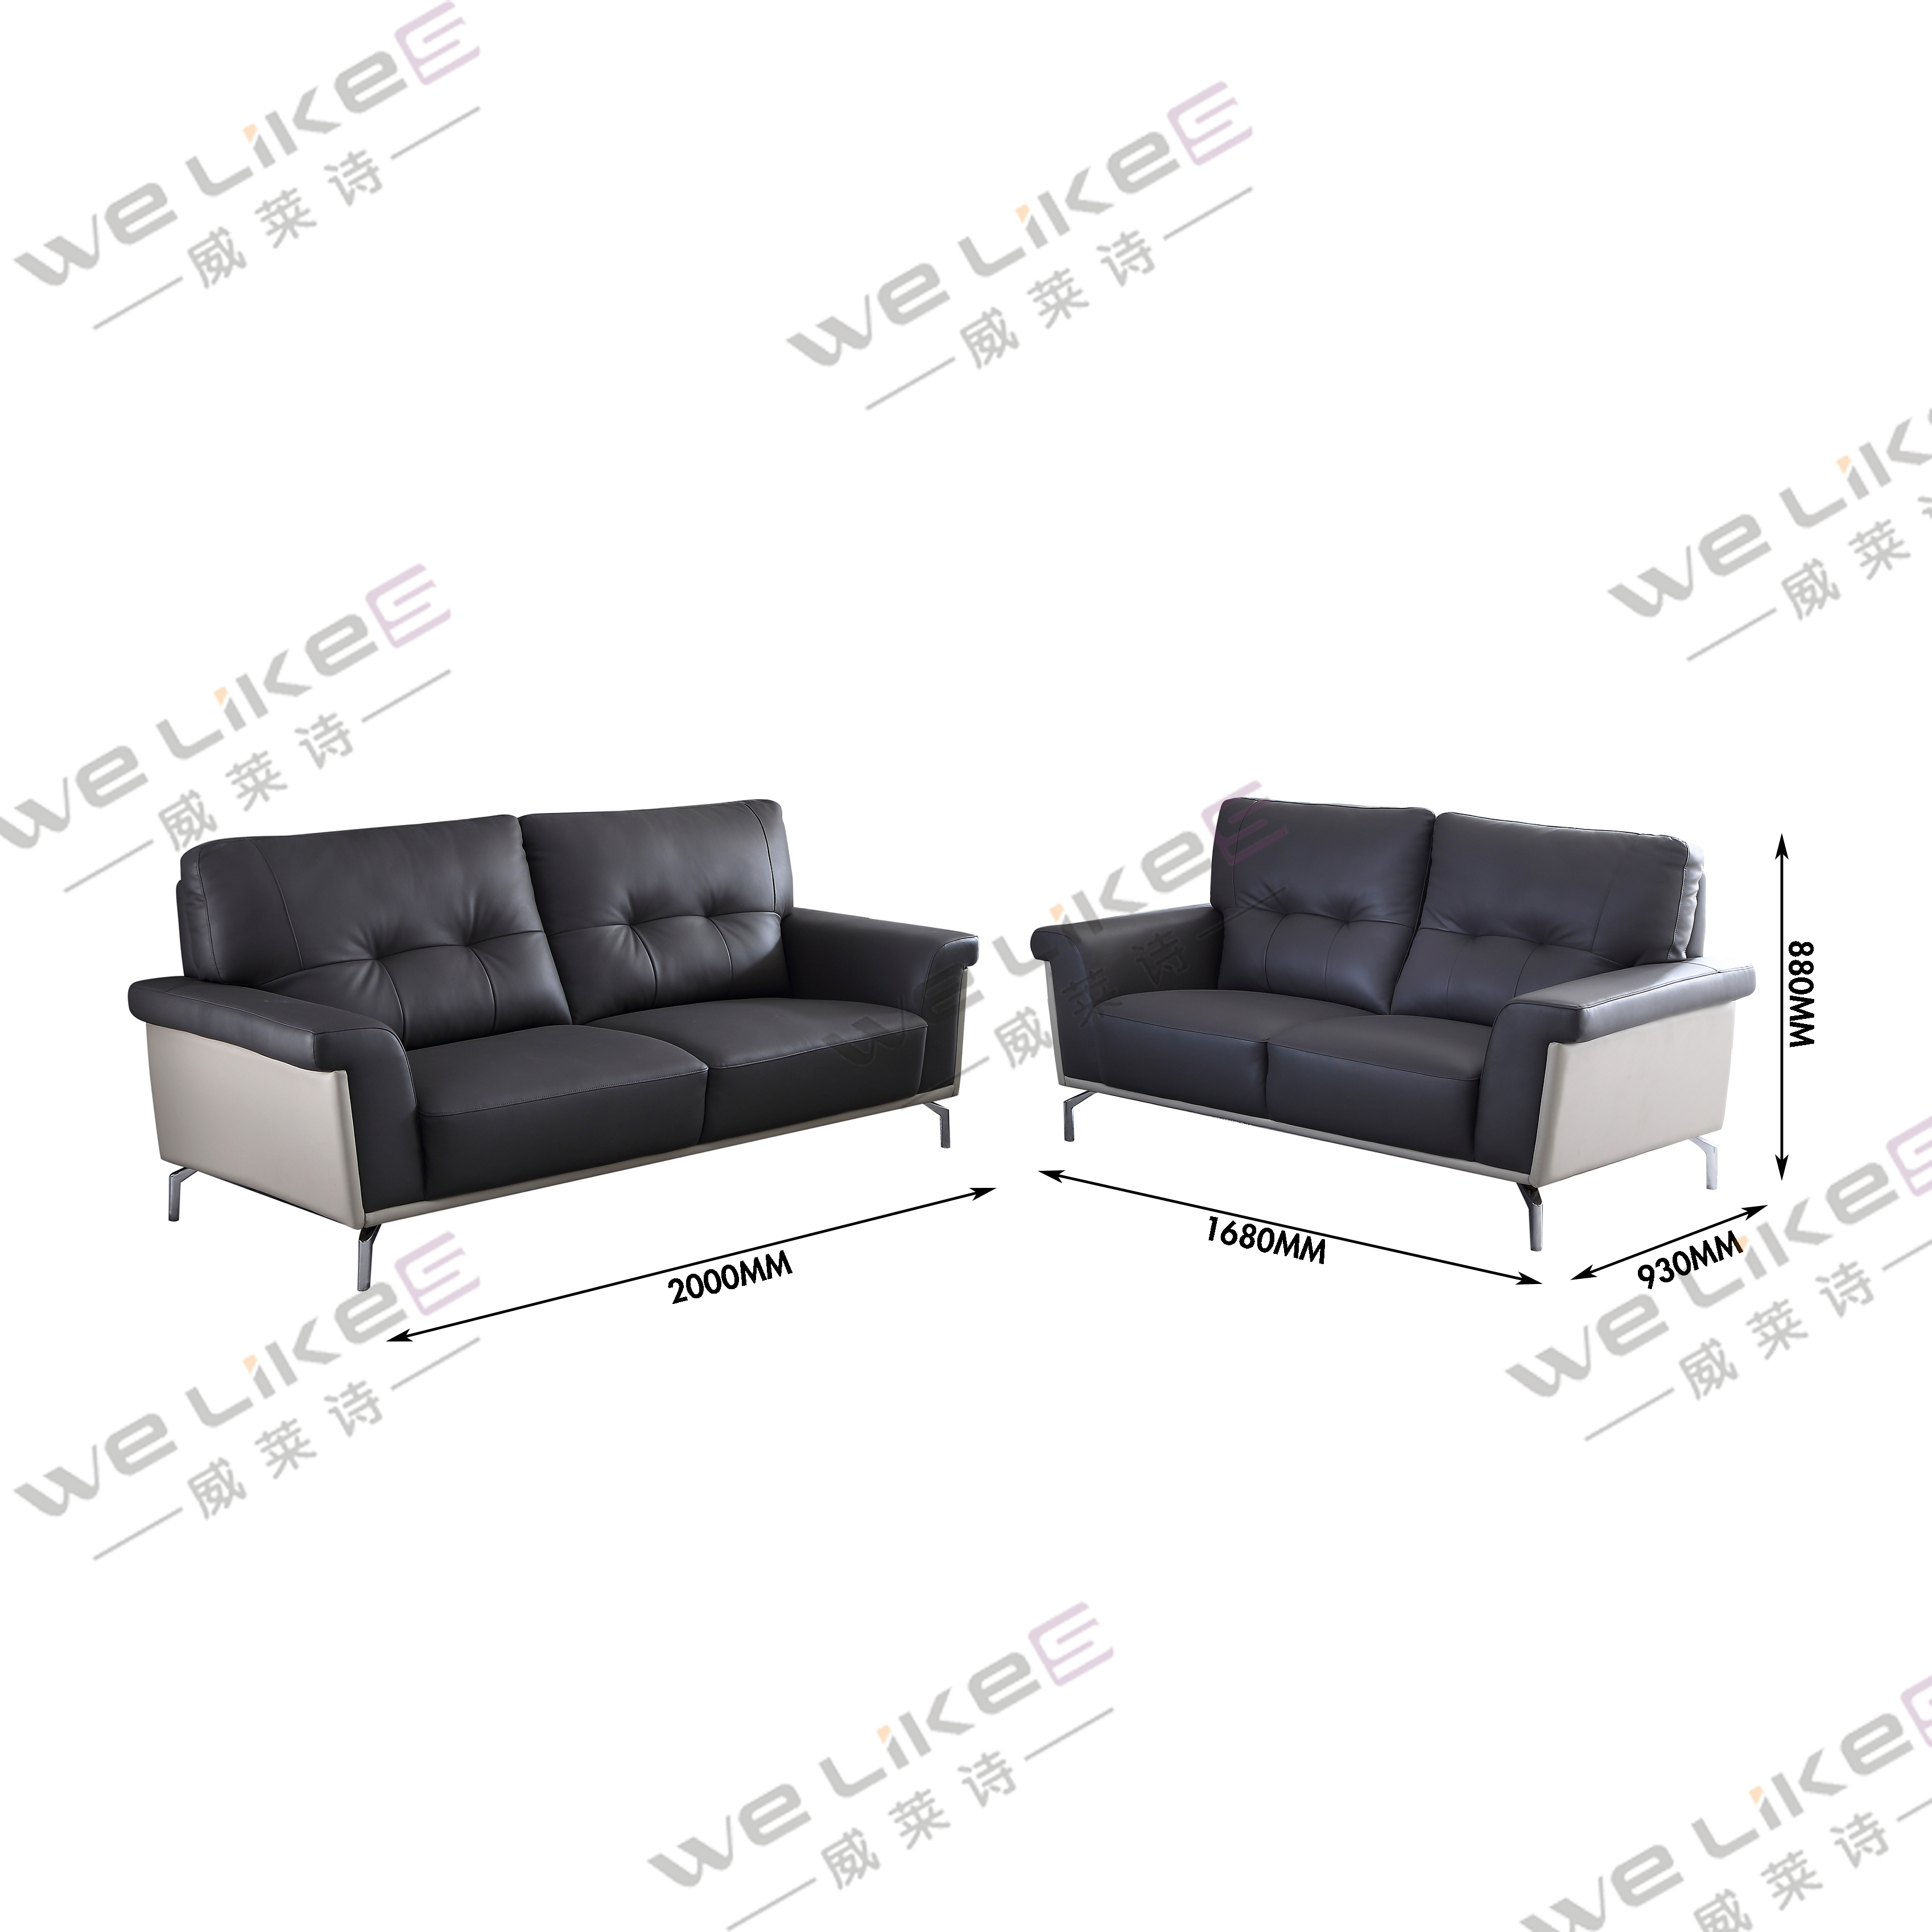 ZM773 Welikes Modern Leather Sofa